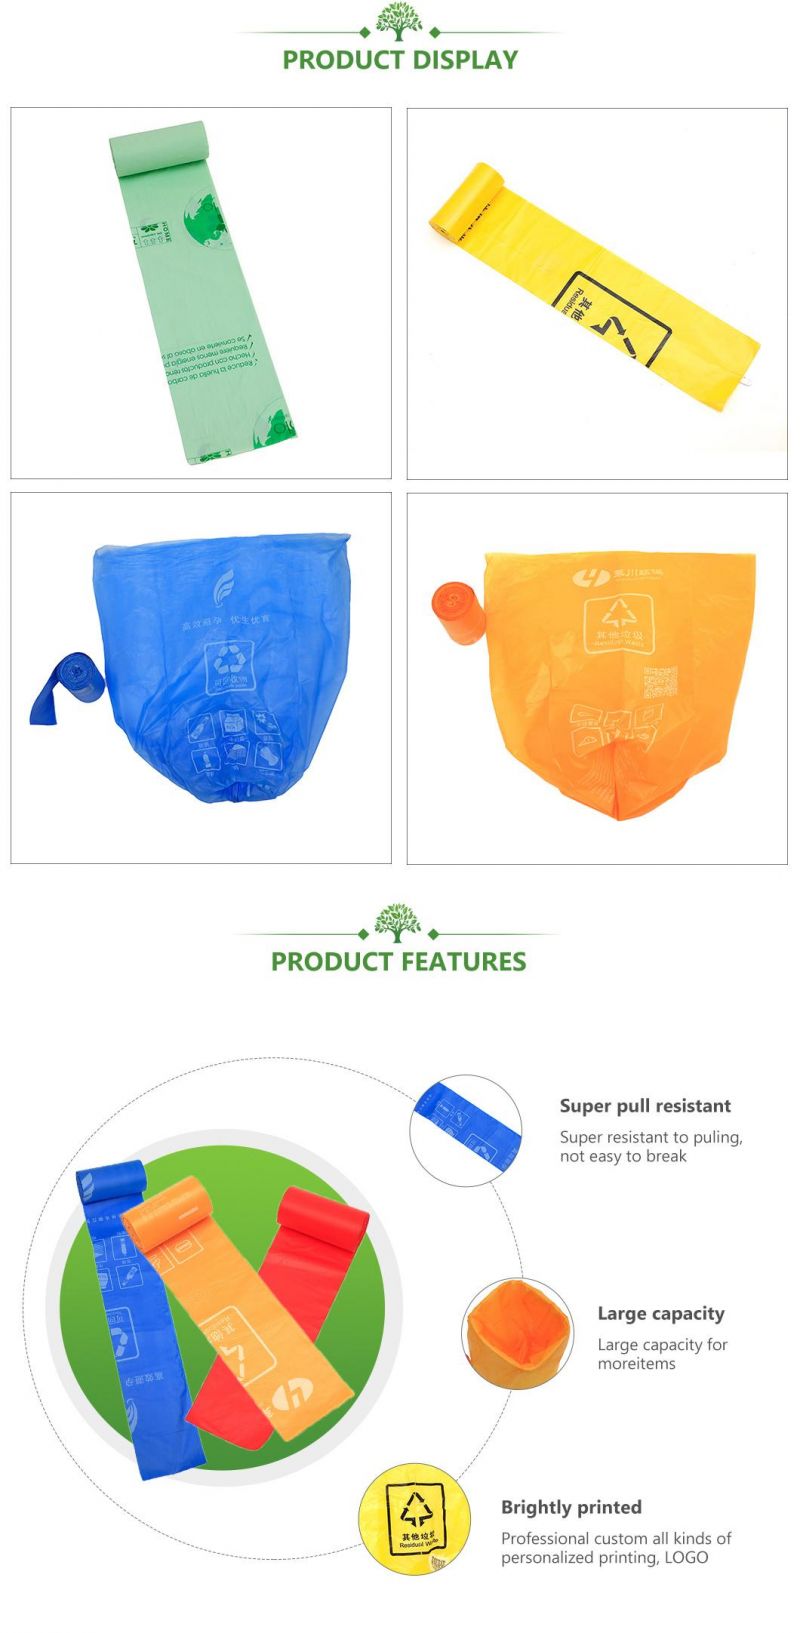 PLA+Pbat/Pbat+Corn Starch Biodegradable Bags, Compostable Bags, Rubbish Bags for Restaurant